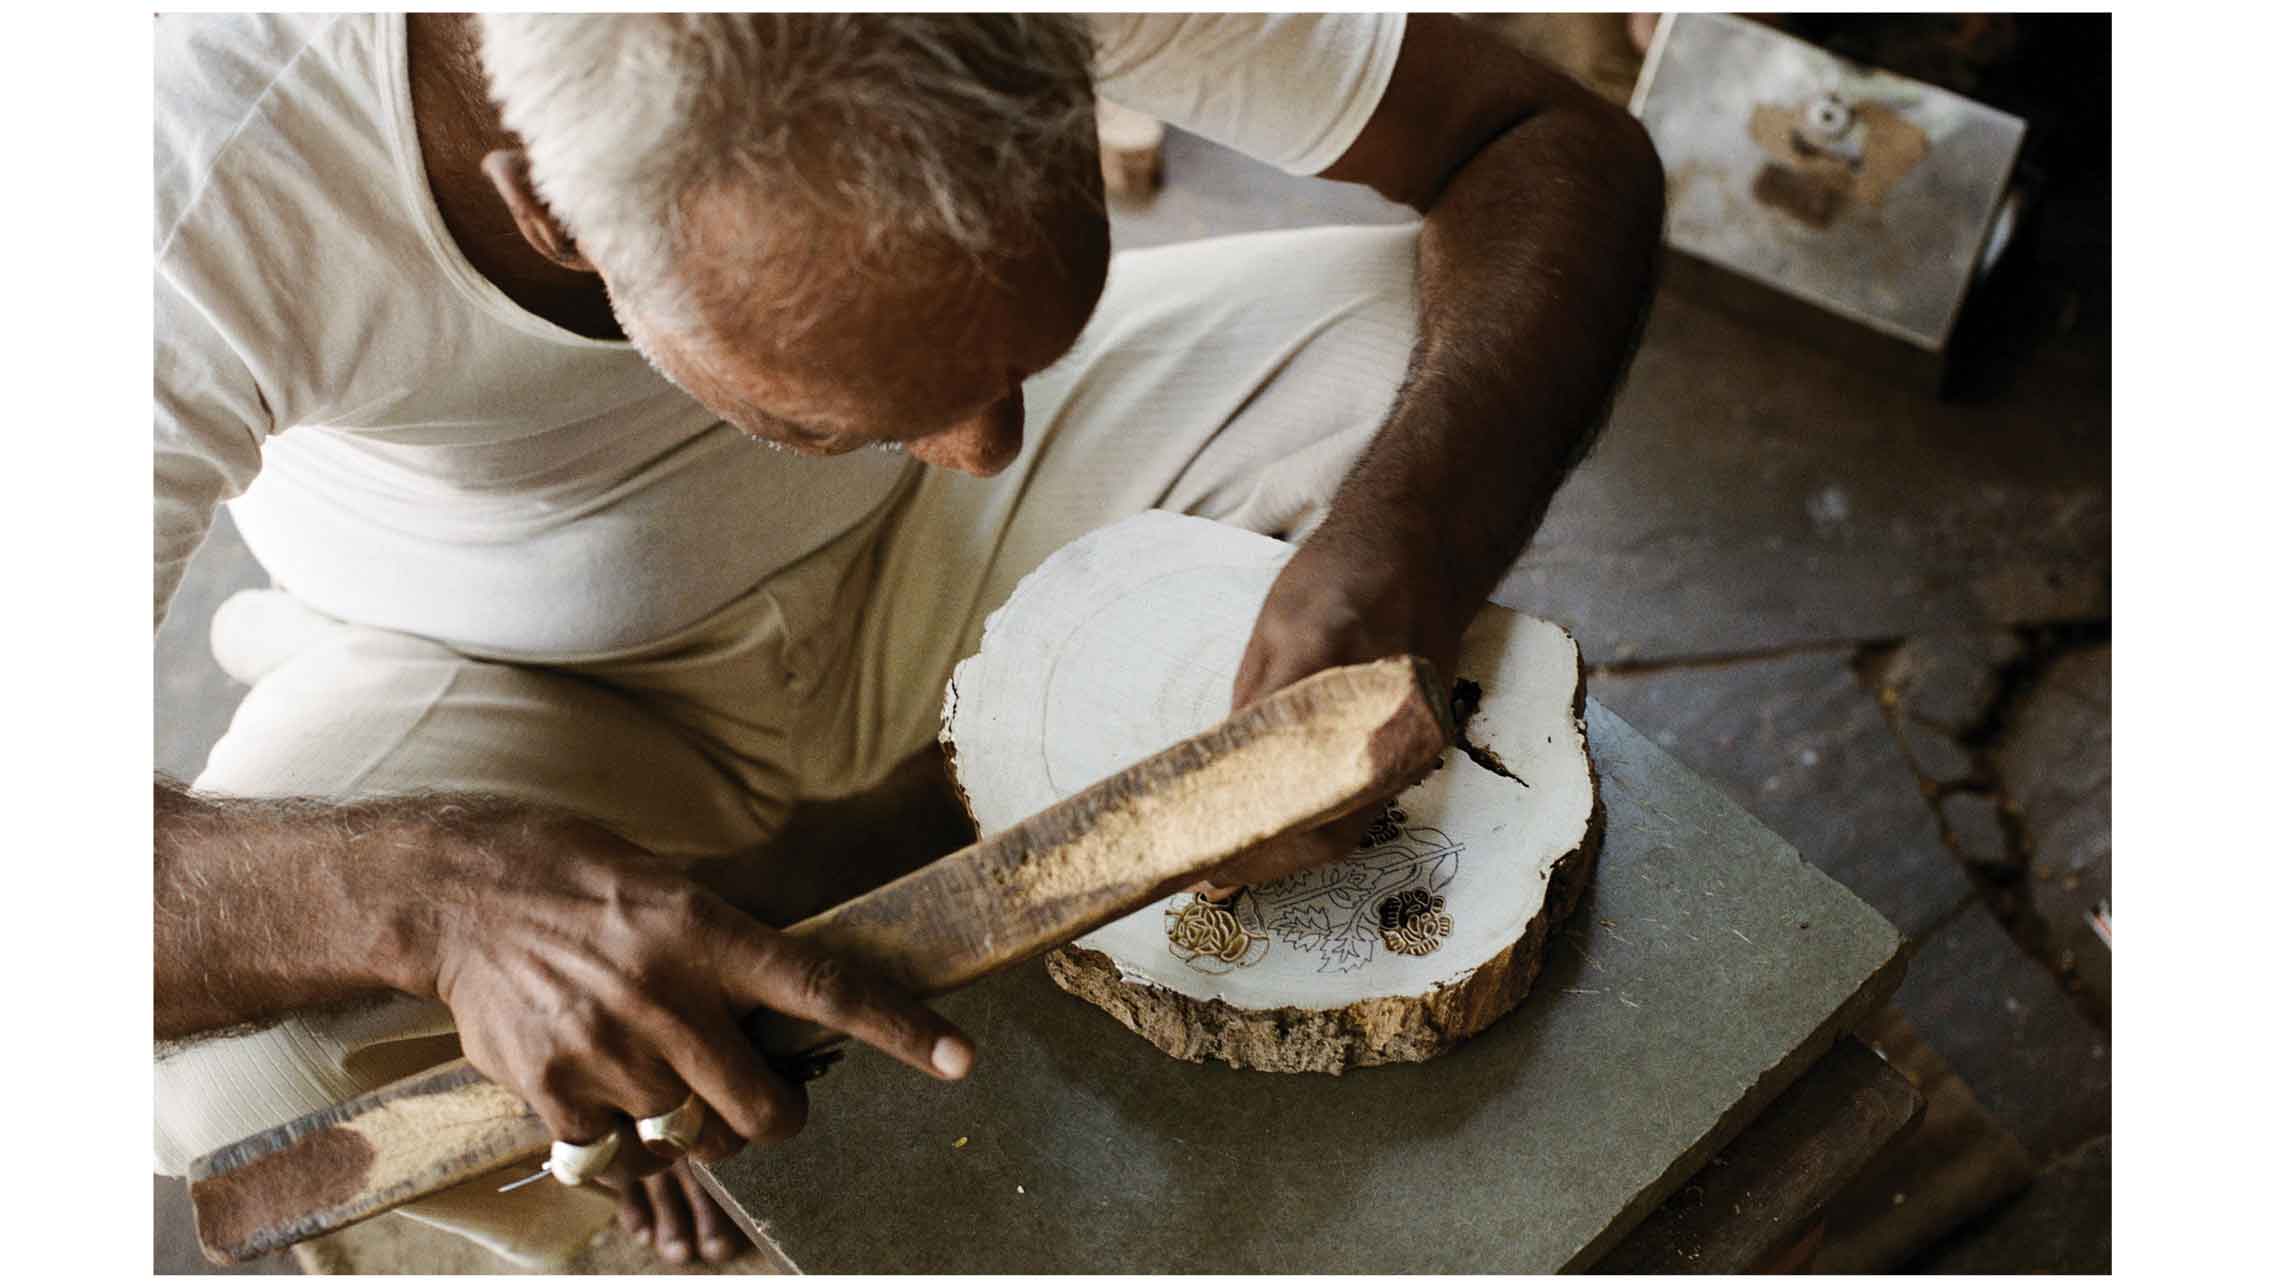 Man hand carving wooden block for block printing